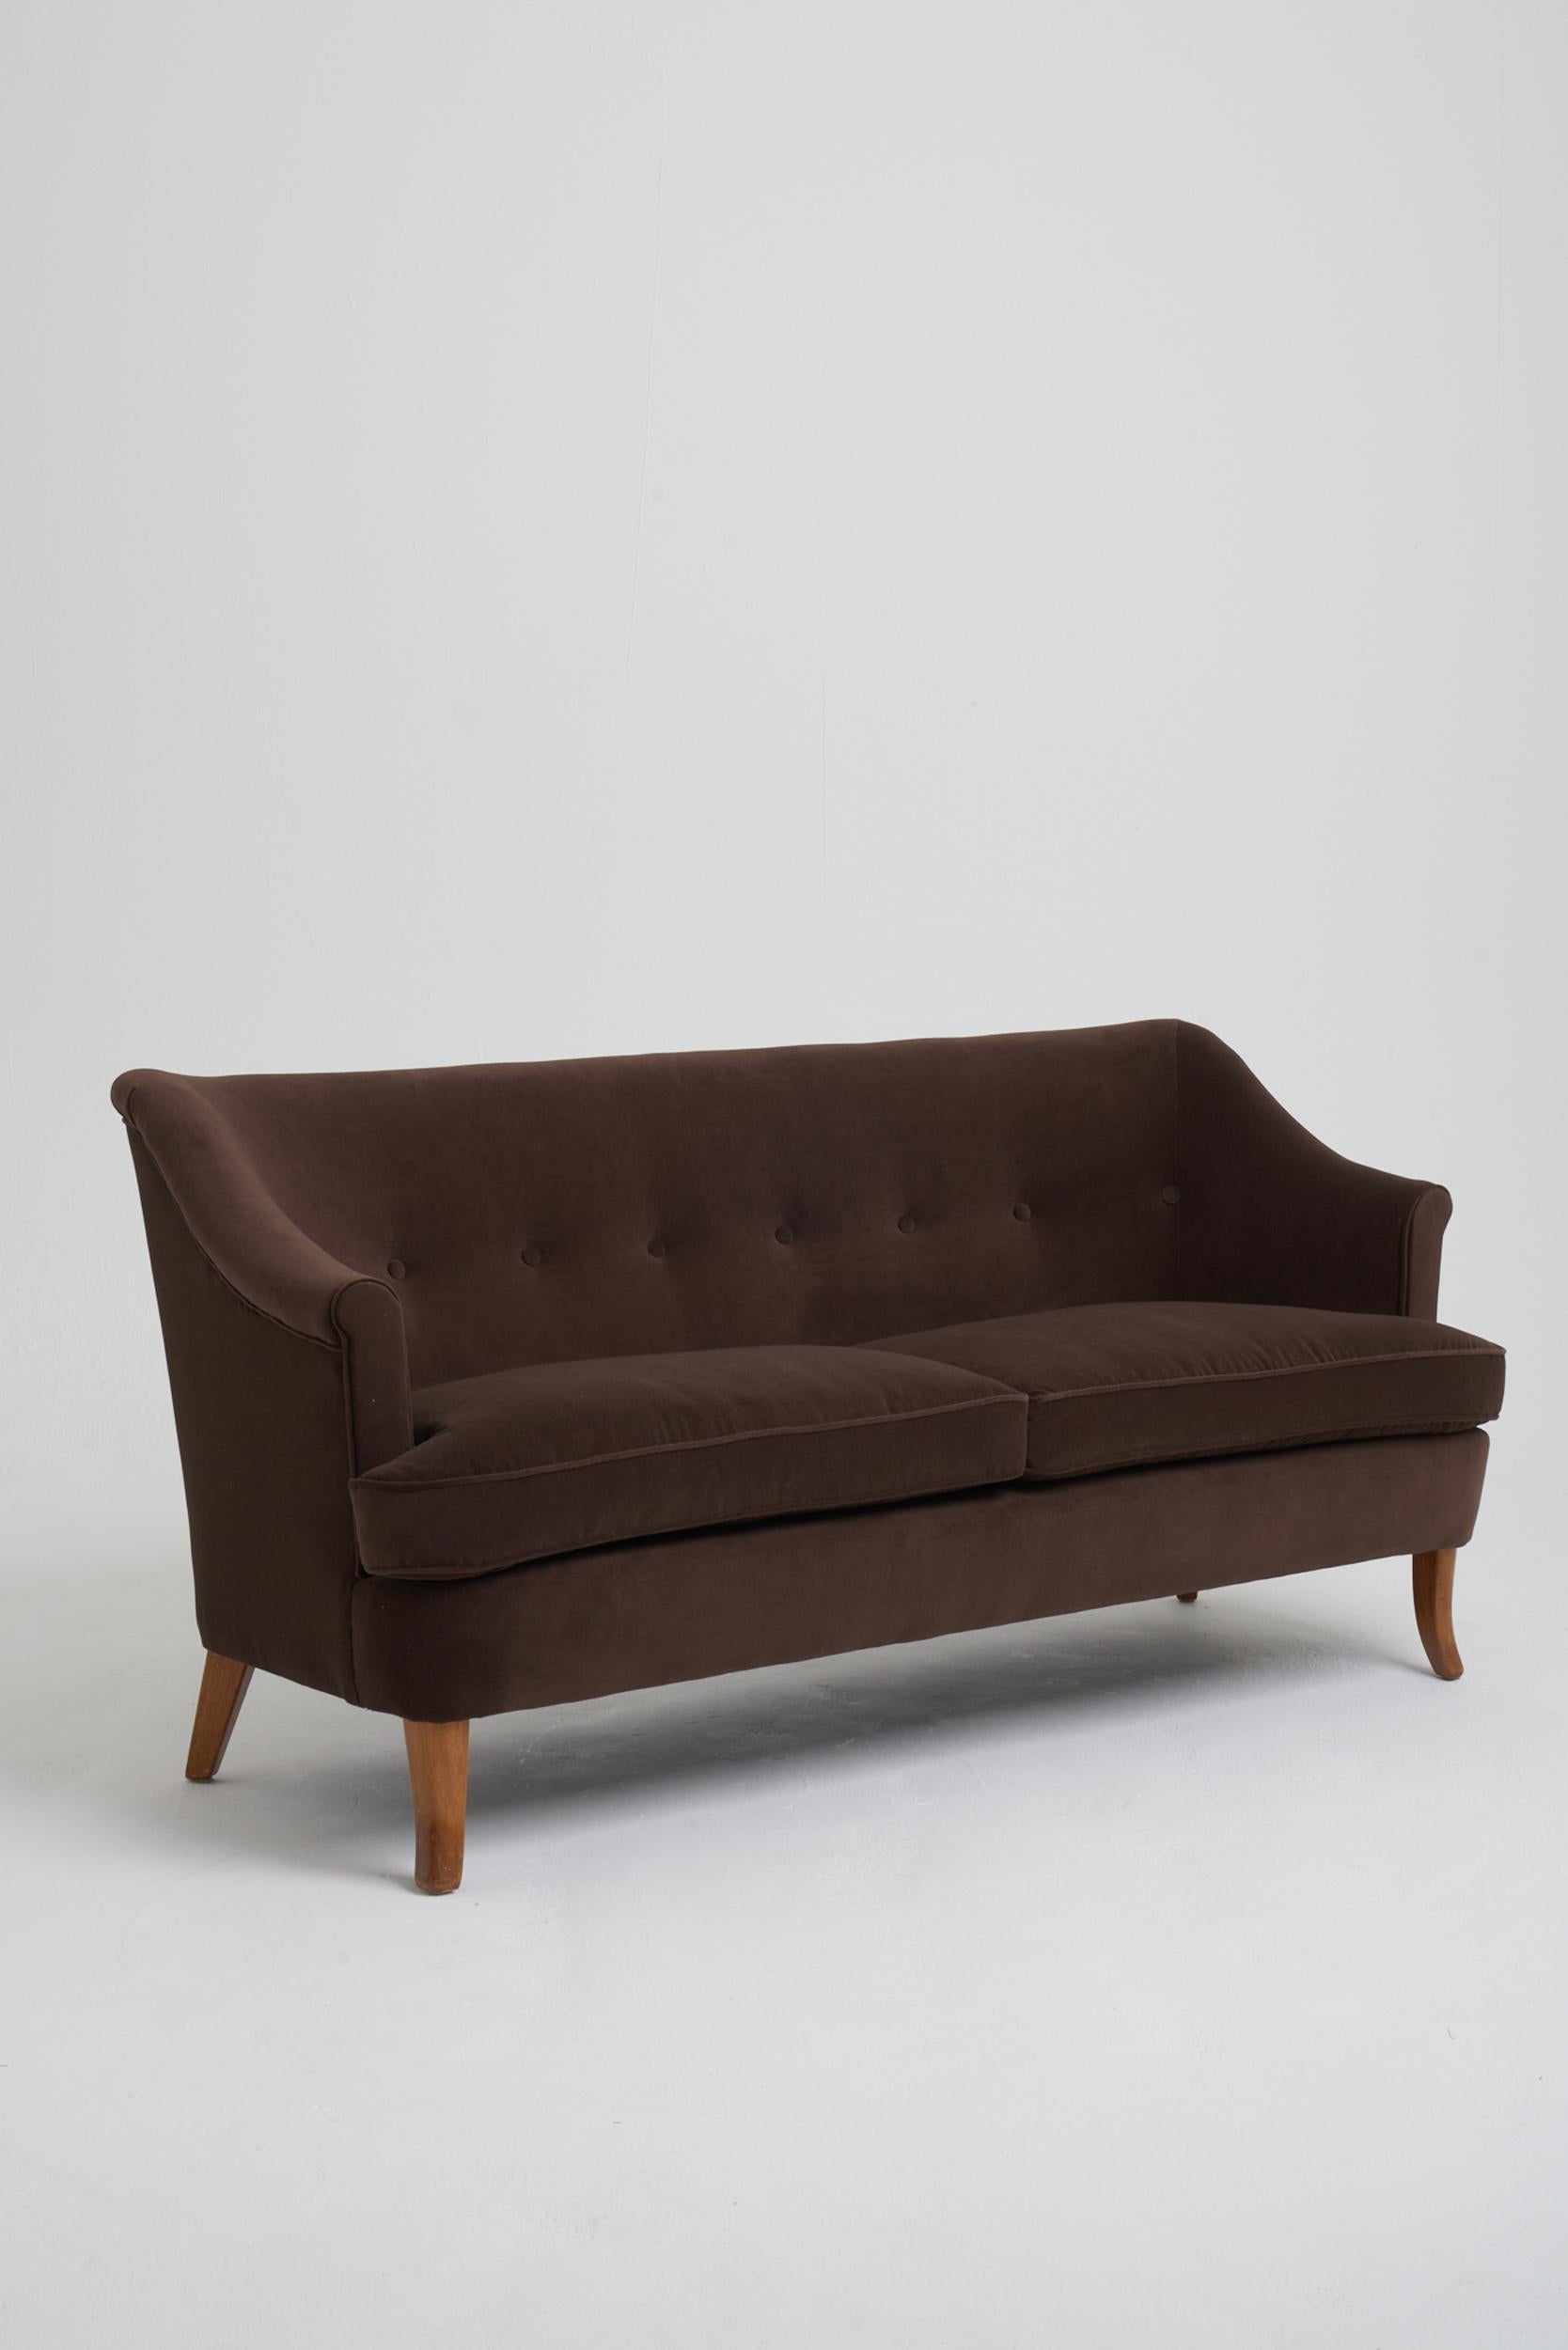 A mid-century chocolate brown velvet buttoned sofa.
Sweden, Circa 1950.